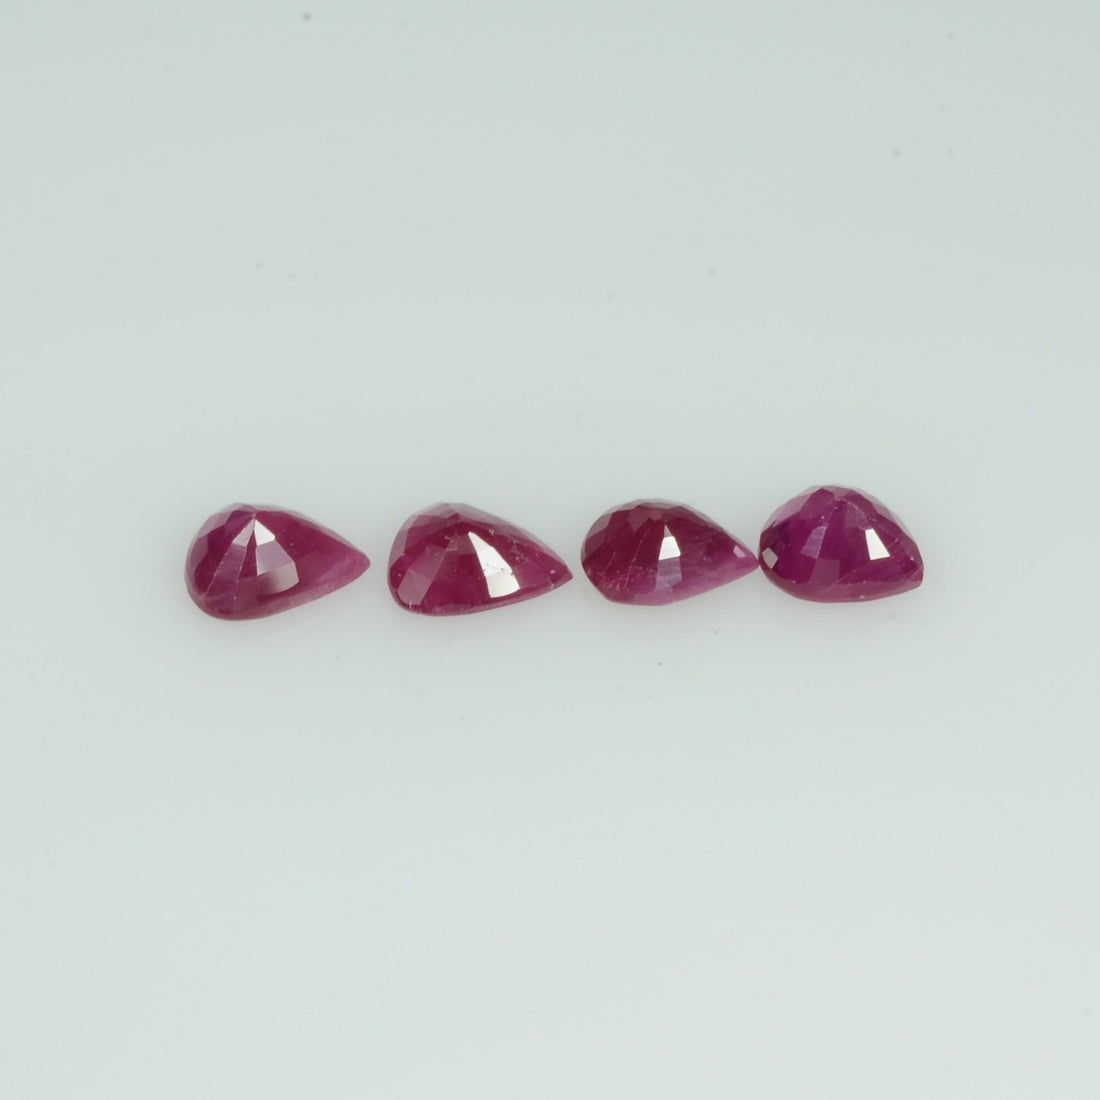 5x4MM Natural Ruby Loose Gemstone Pear Cut